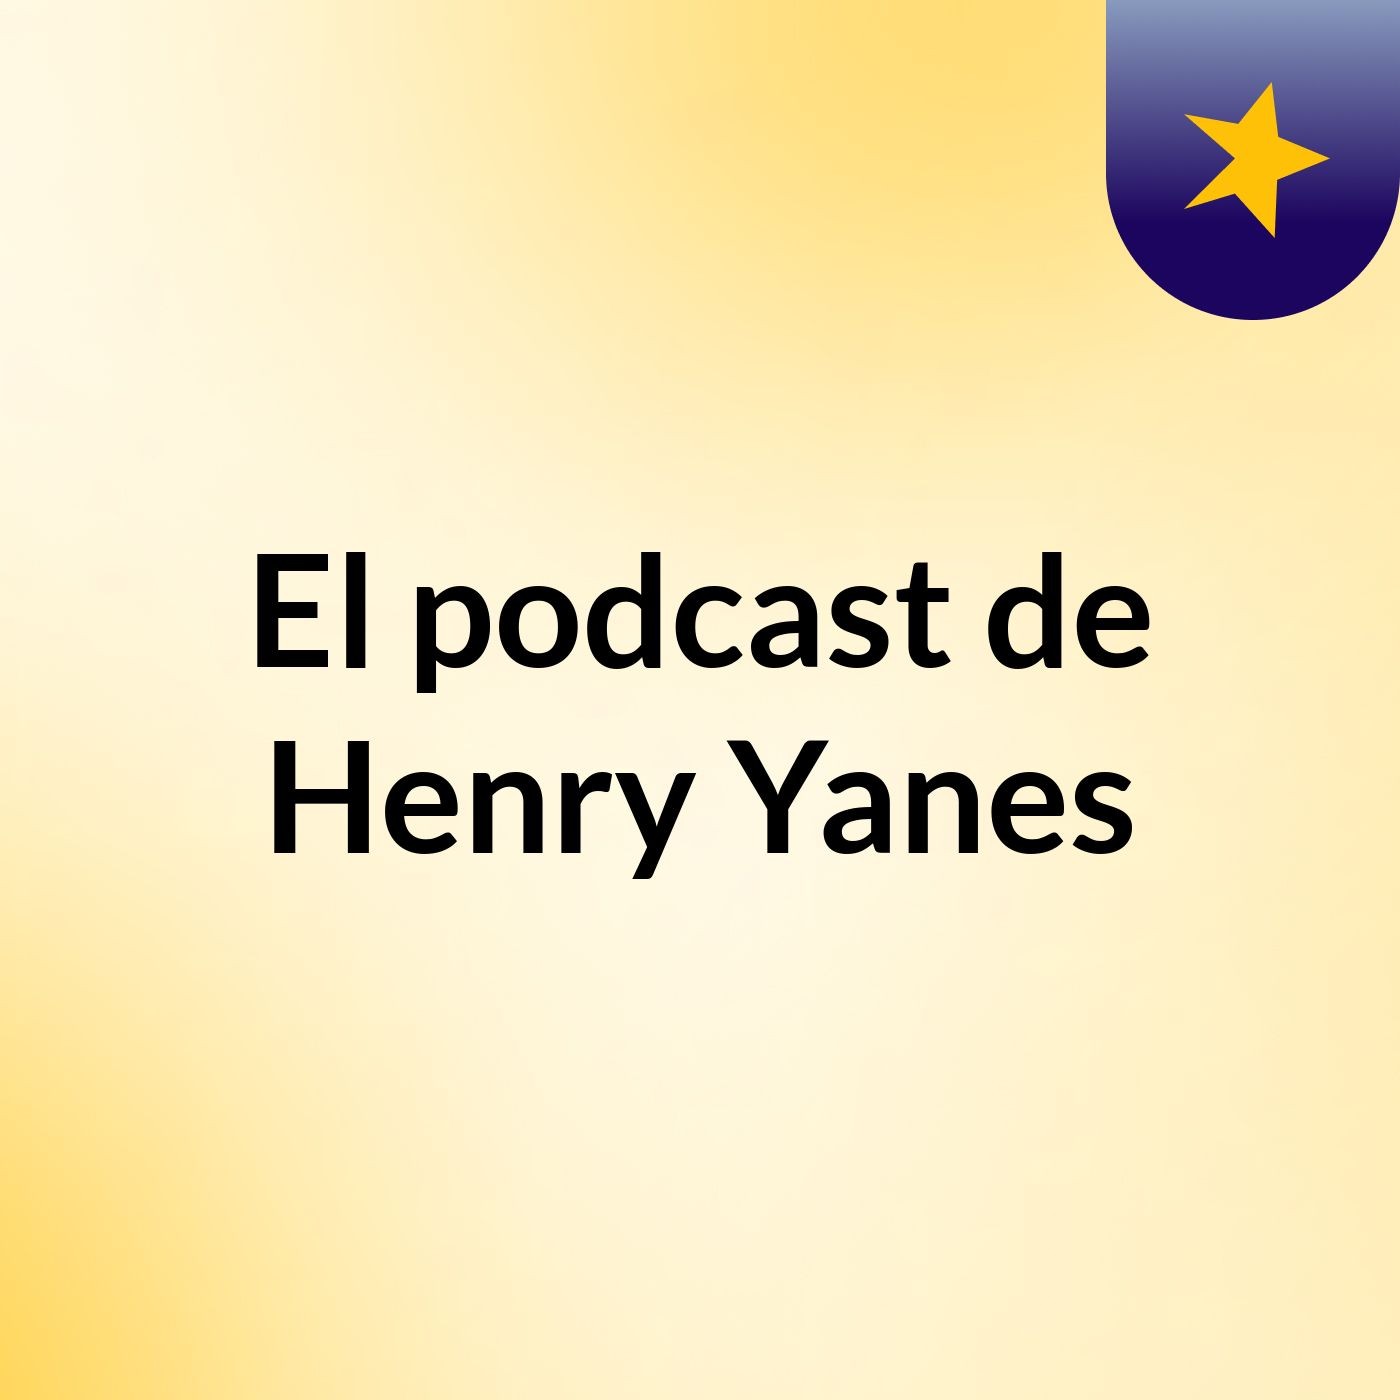 El podcast de Henry Yanes